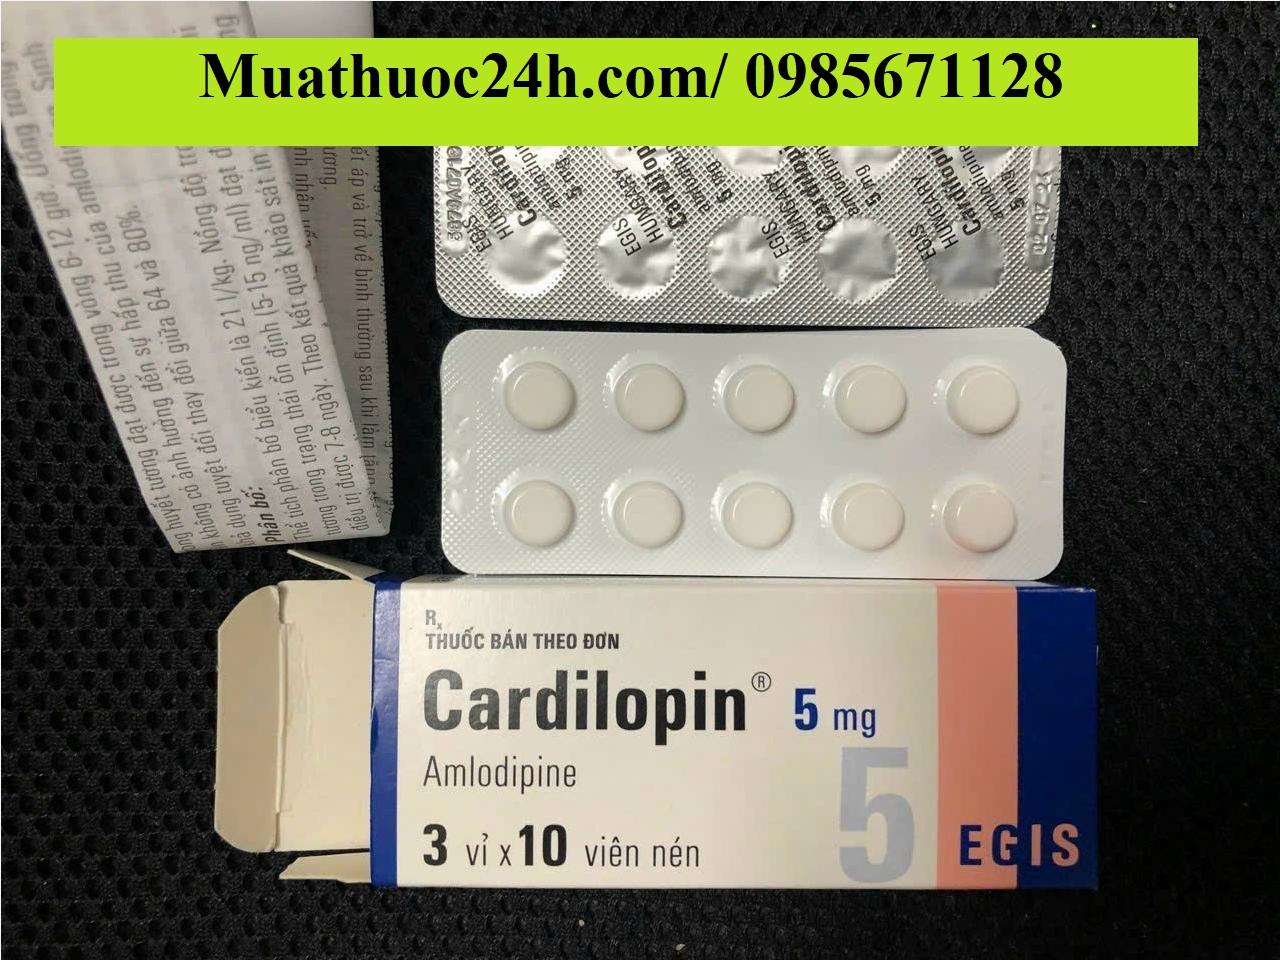 Thuốc Cardilopin 5mg Amlodipine giá bao nhiêu mua ở đâu